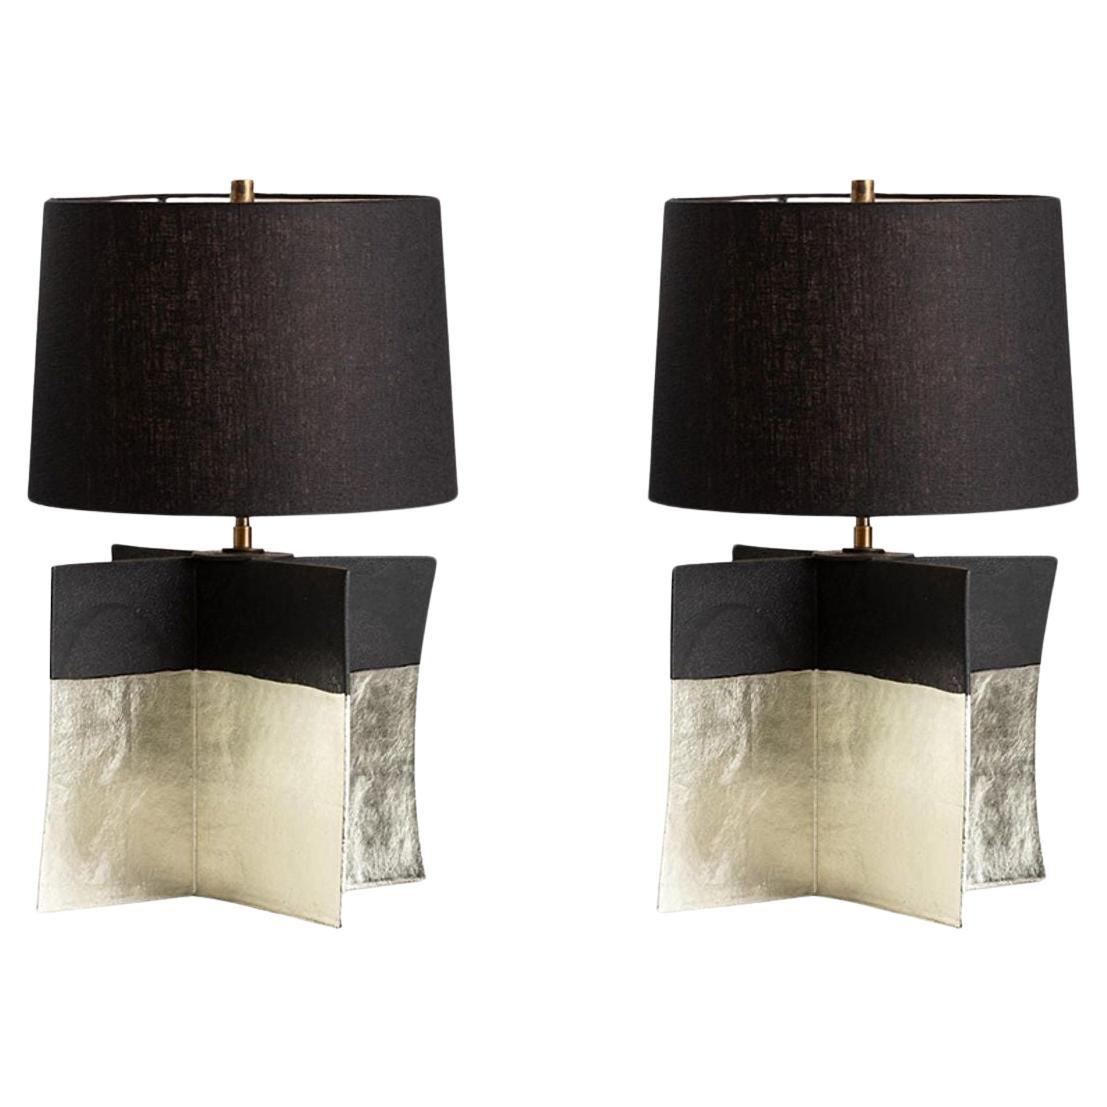 Dumais Made, Contemporary, Ceramic Croisillon Table Lamps, Gold Glaze, 2021 For Sale